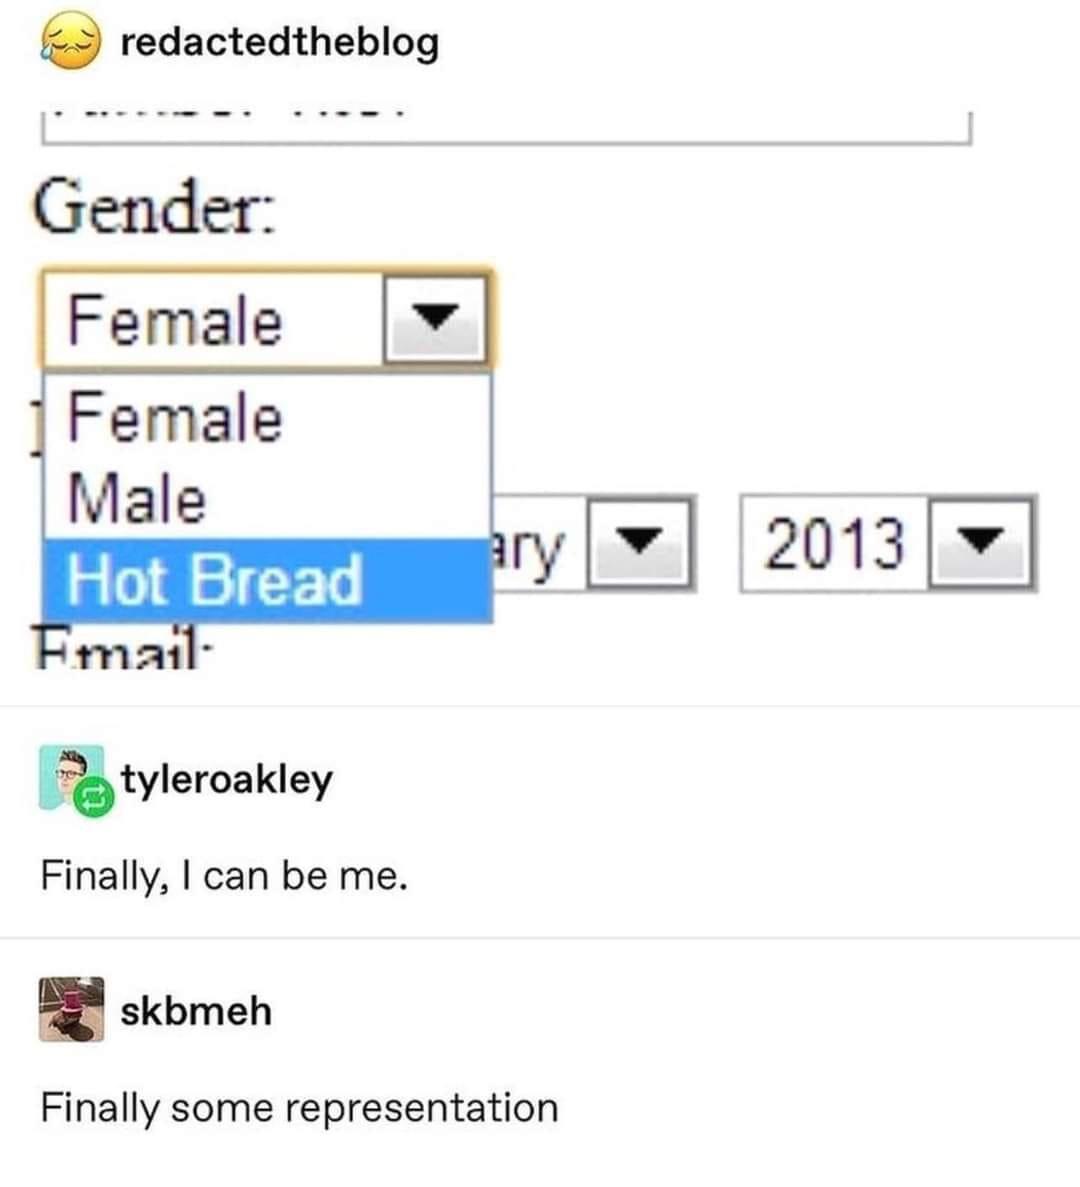 best memes of the week - -  - redactedtheblog Gender Female Female Male Hot Bread Email tyleroakley Finally, I can be me. skbmeh ary Finally some representation 2013